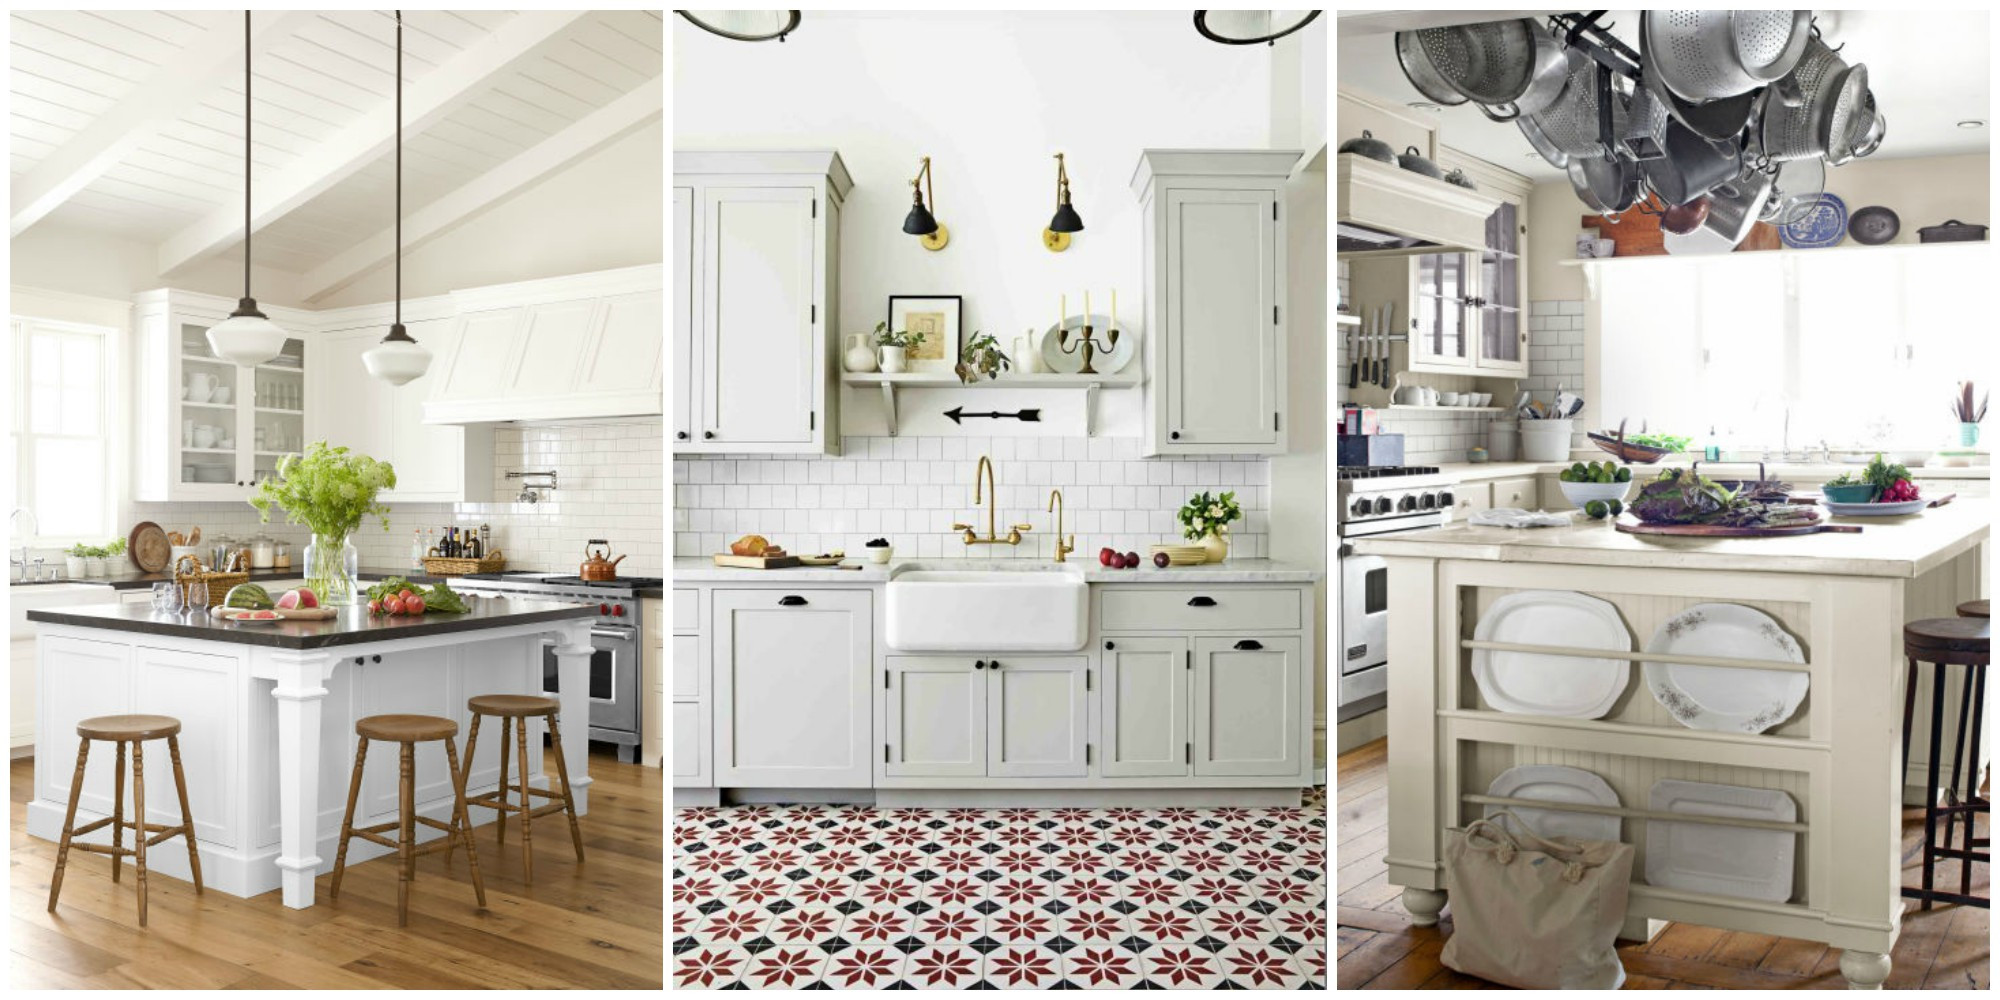 Best ideas about Paint Colors For Kitchen Cabinets
. Save or Pin 10 Best White Kitchen Cabinet Paint Colors Ideas for Now.